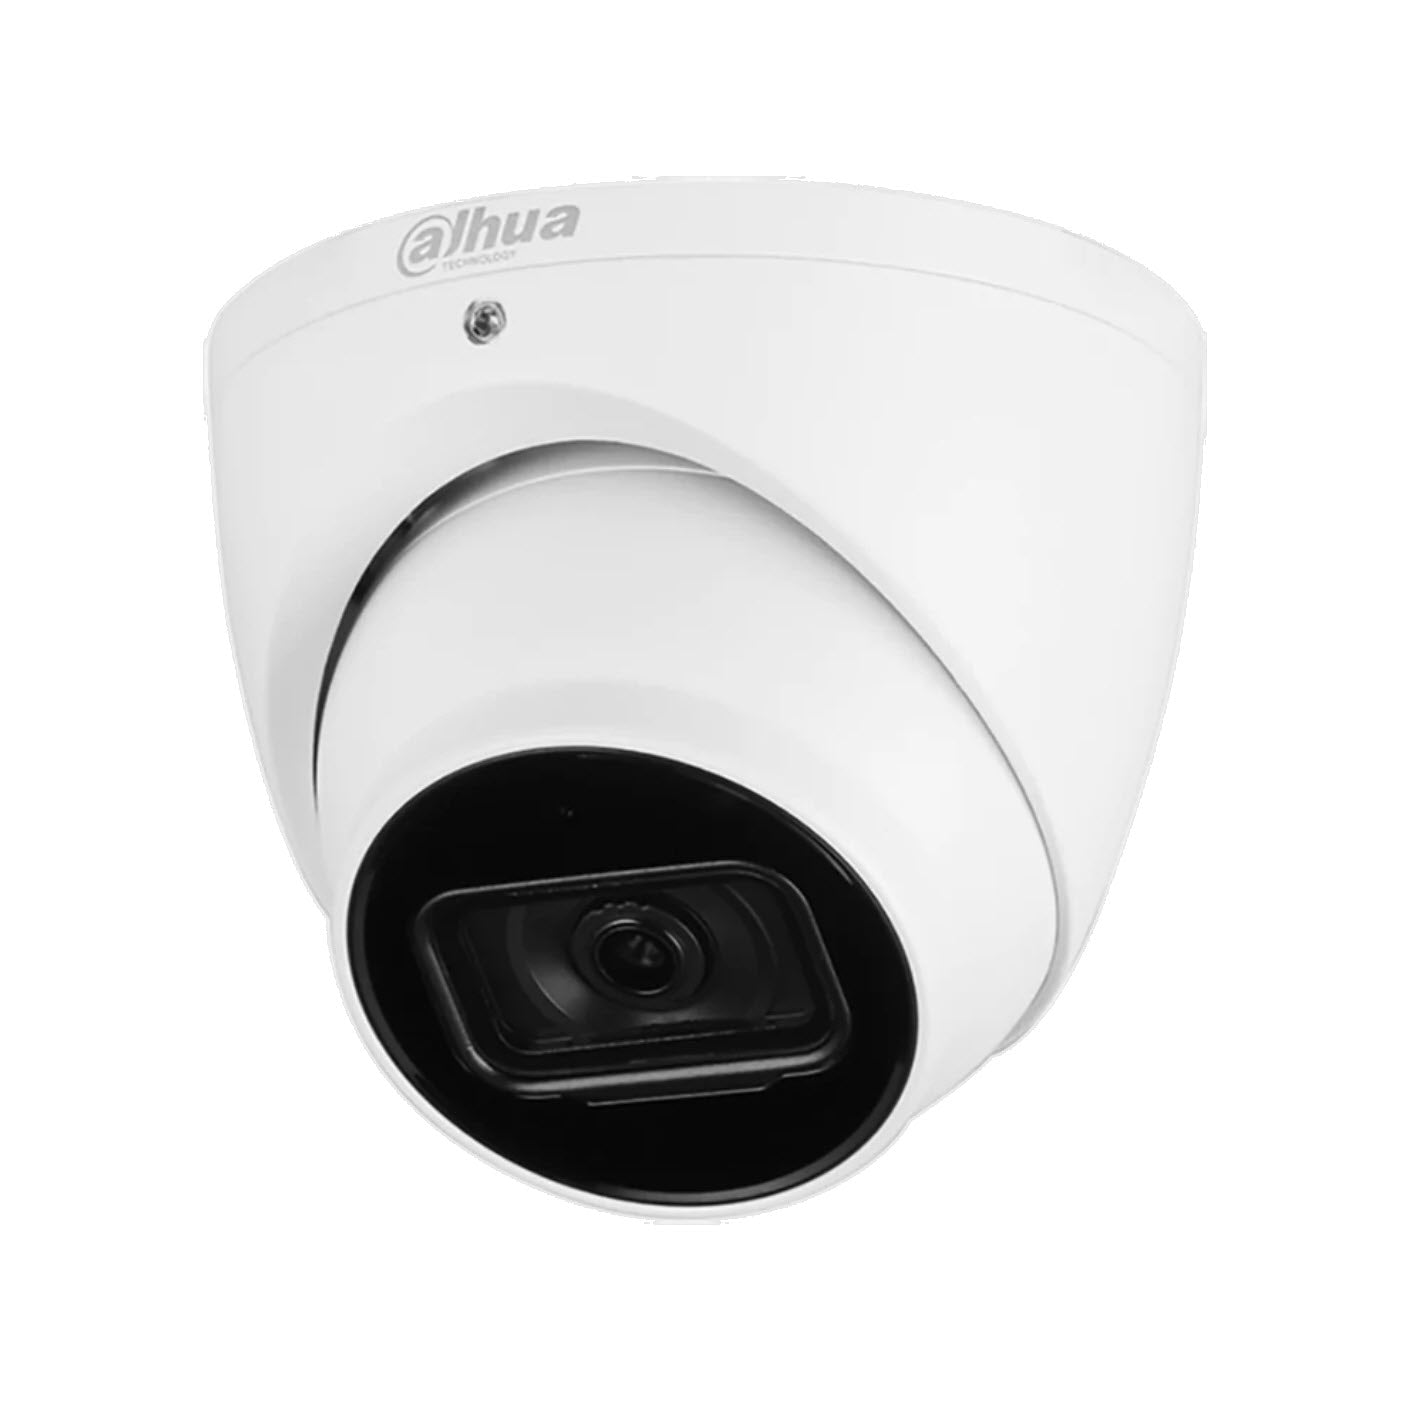 Dahua DH-IPC-HDW3866EMP-S-AUS 4 Cameras with  4CH AI NVR System (8MP Camera) CCTV Kit